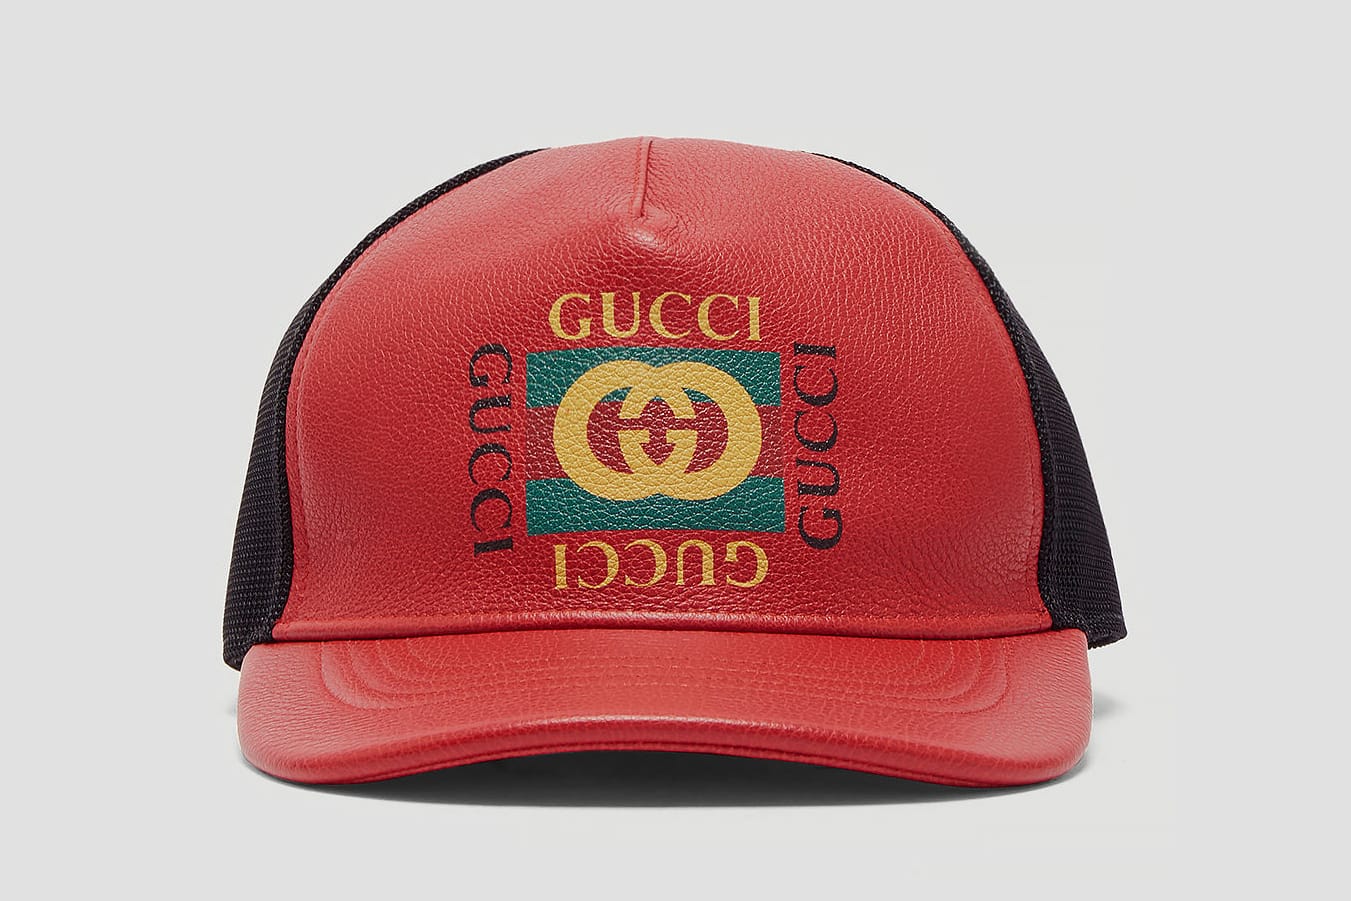 gucci trucker hat